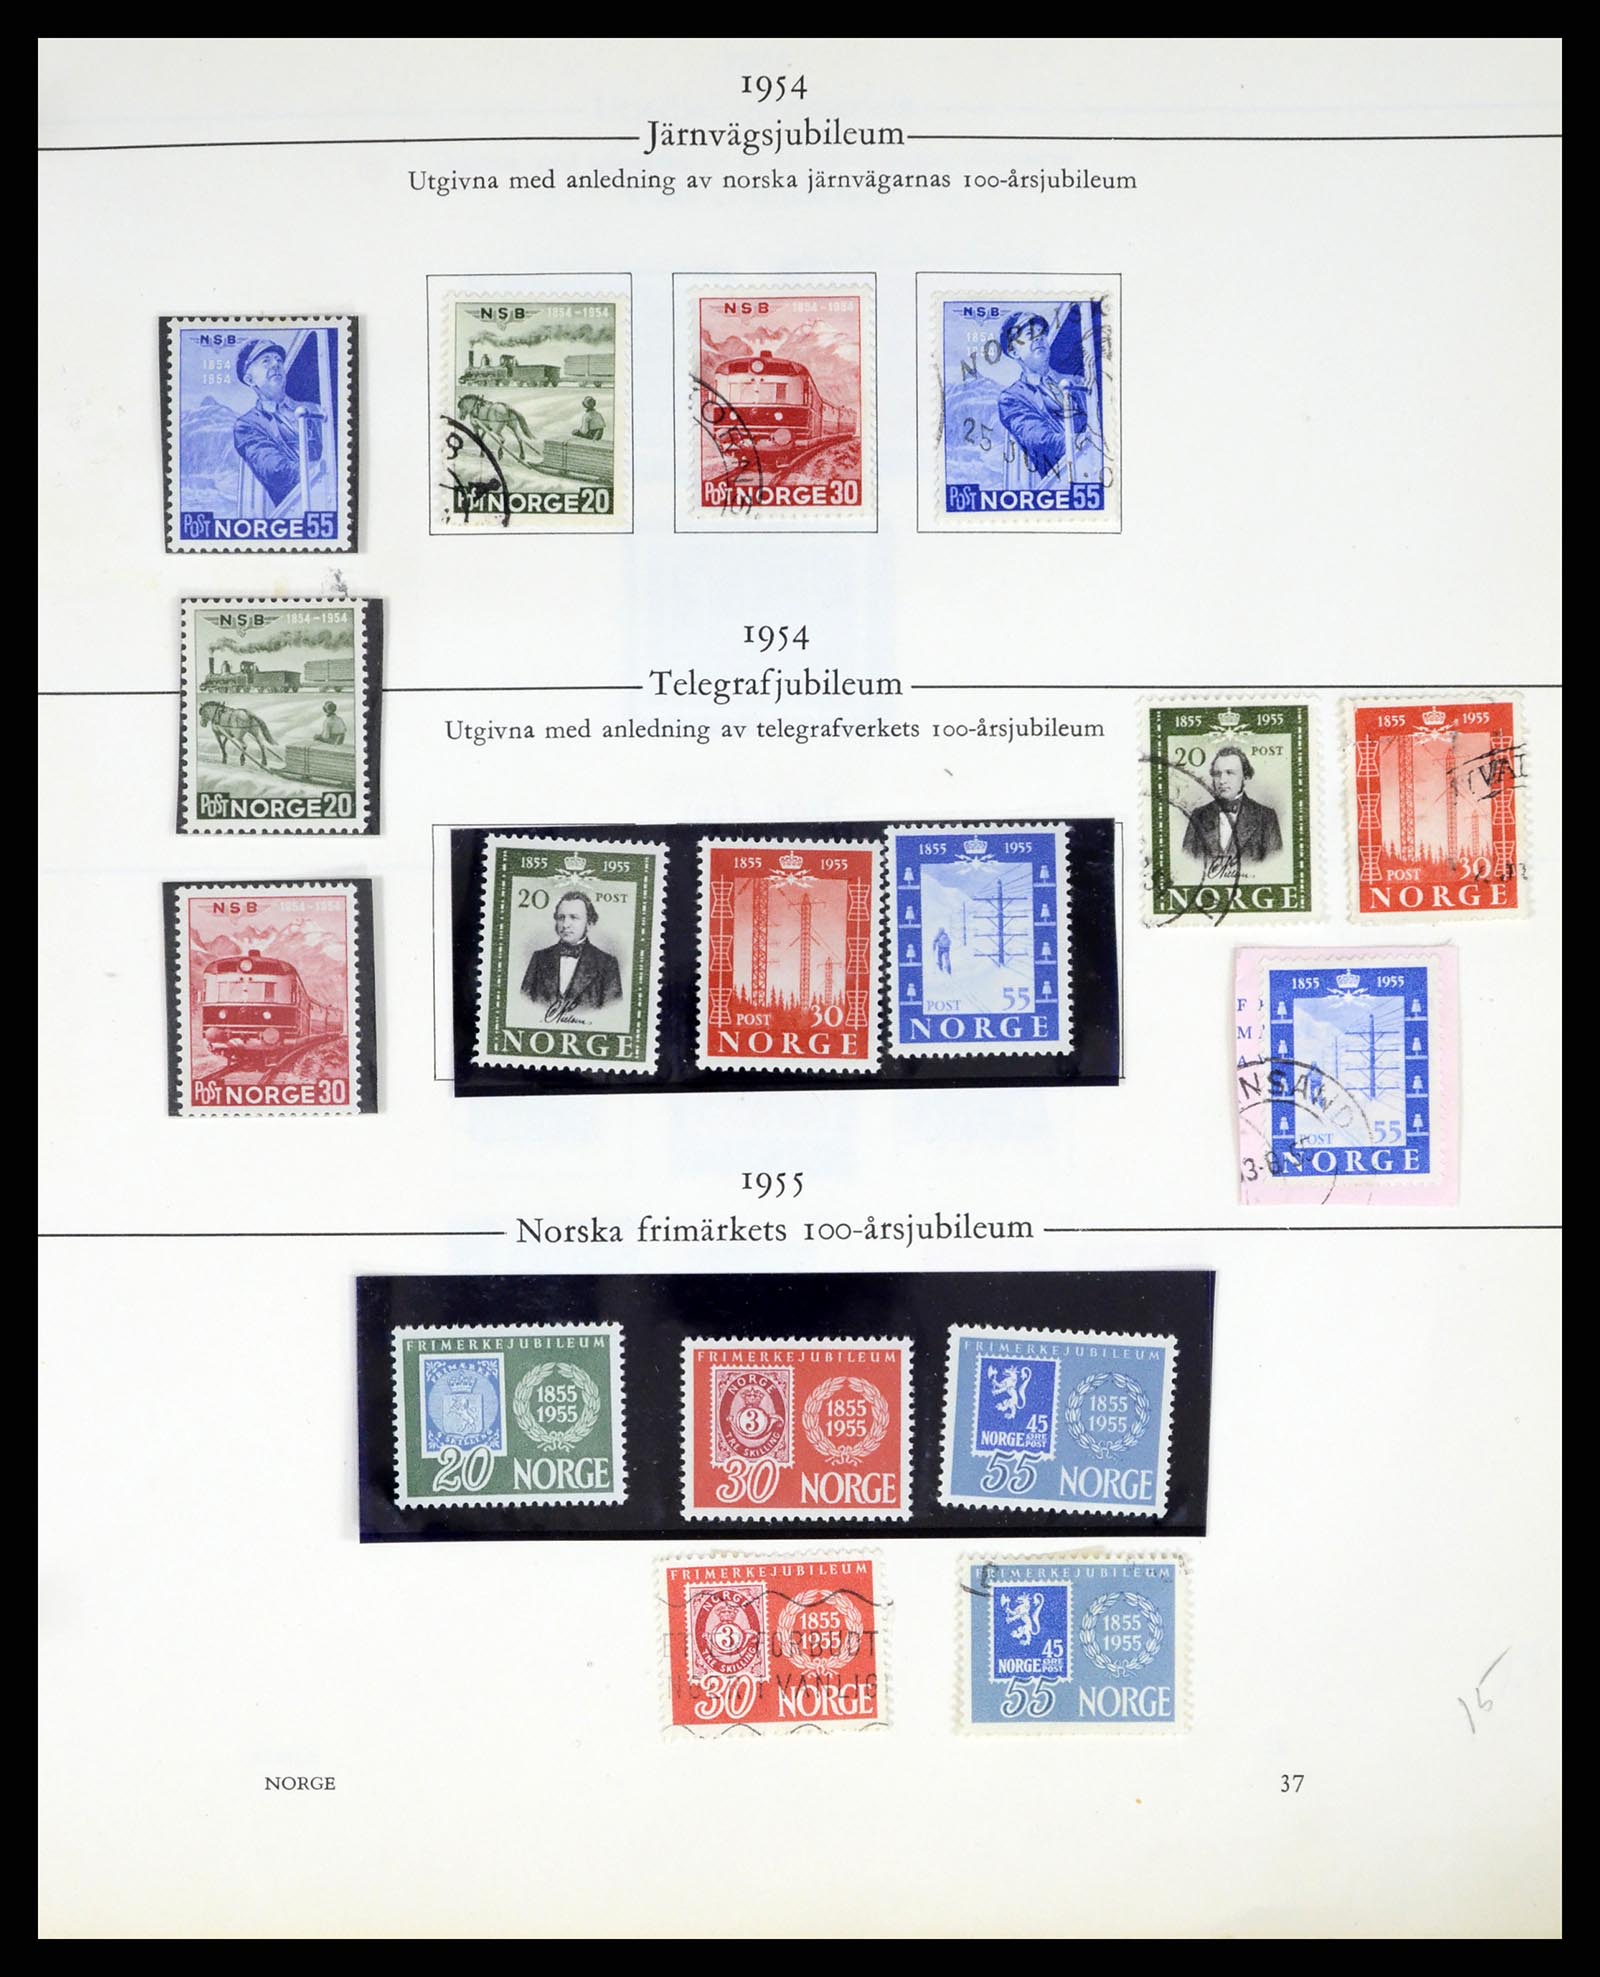 37387 038 - Stamp collection 37387 Scandinavia 1851-1960.